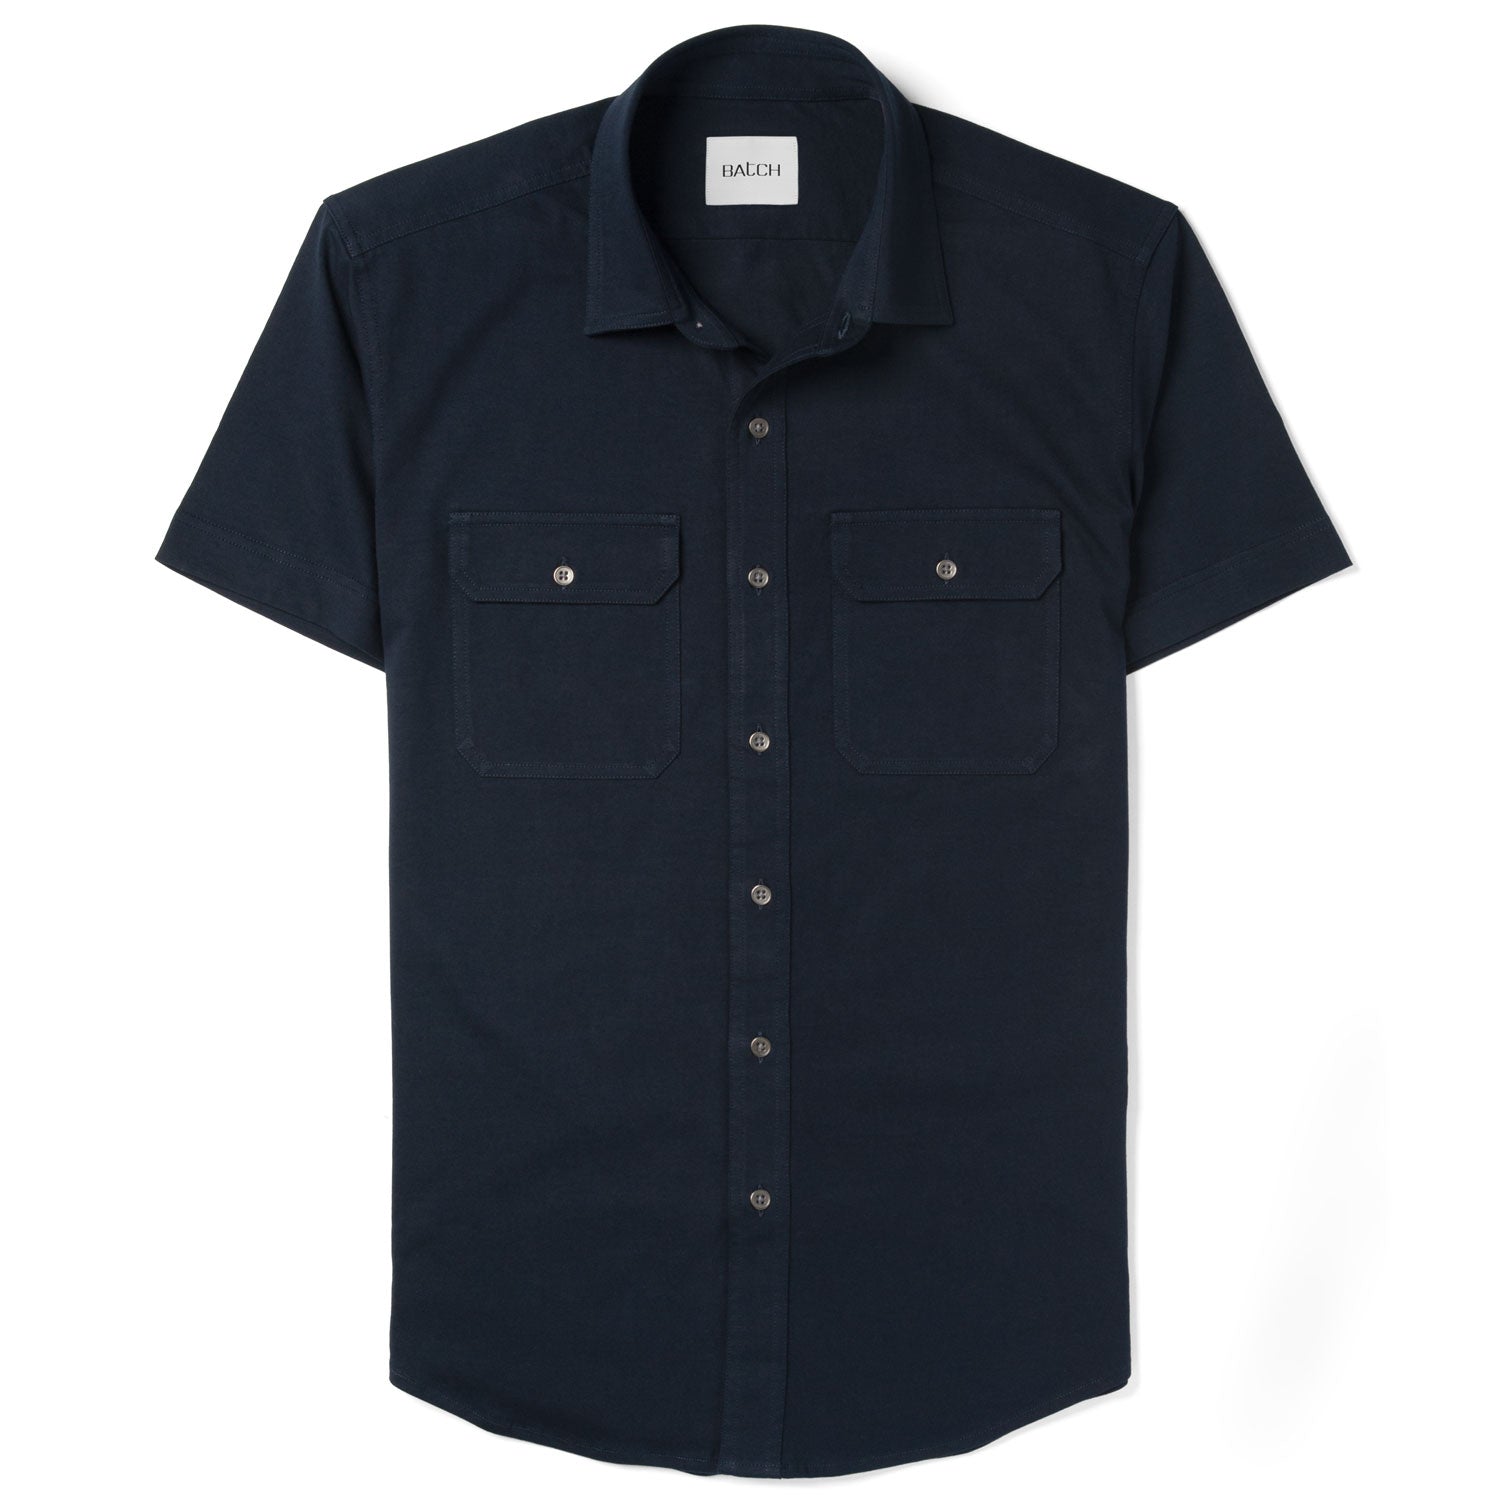 Constructor Knit Utility Short Sleeve Shirt – Navy Cotton Jersey